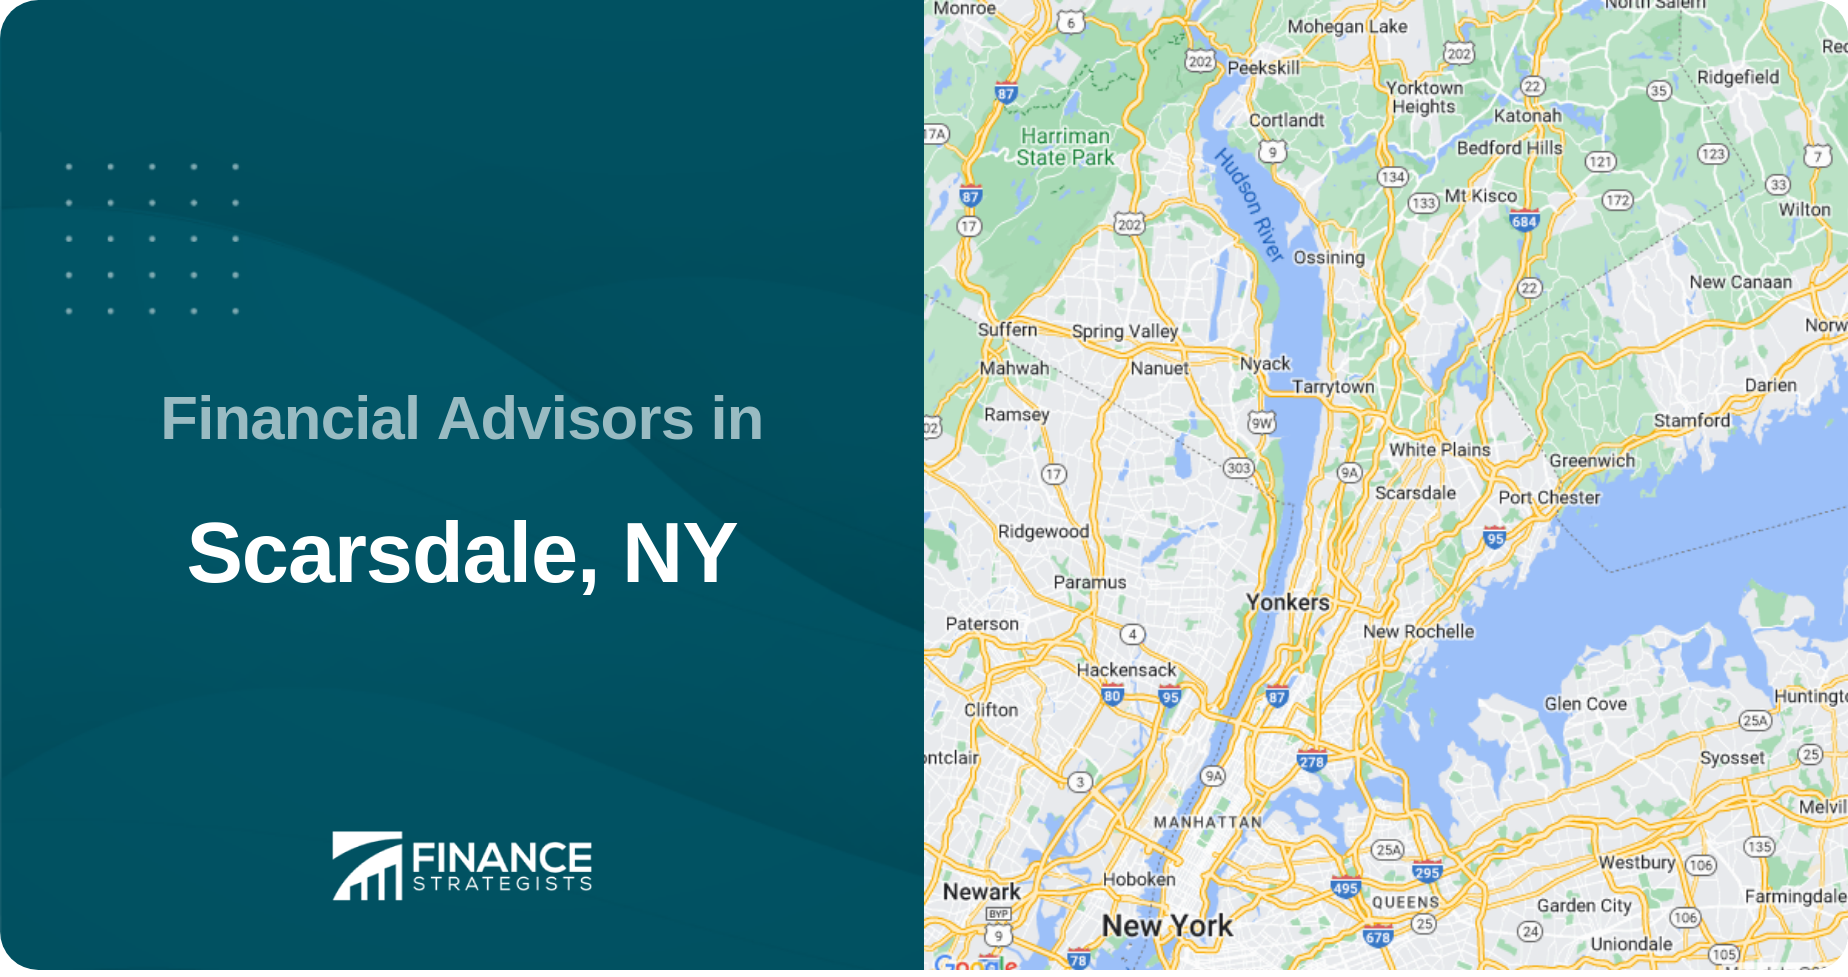 Financial Advisors in Scarsdale, NY